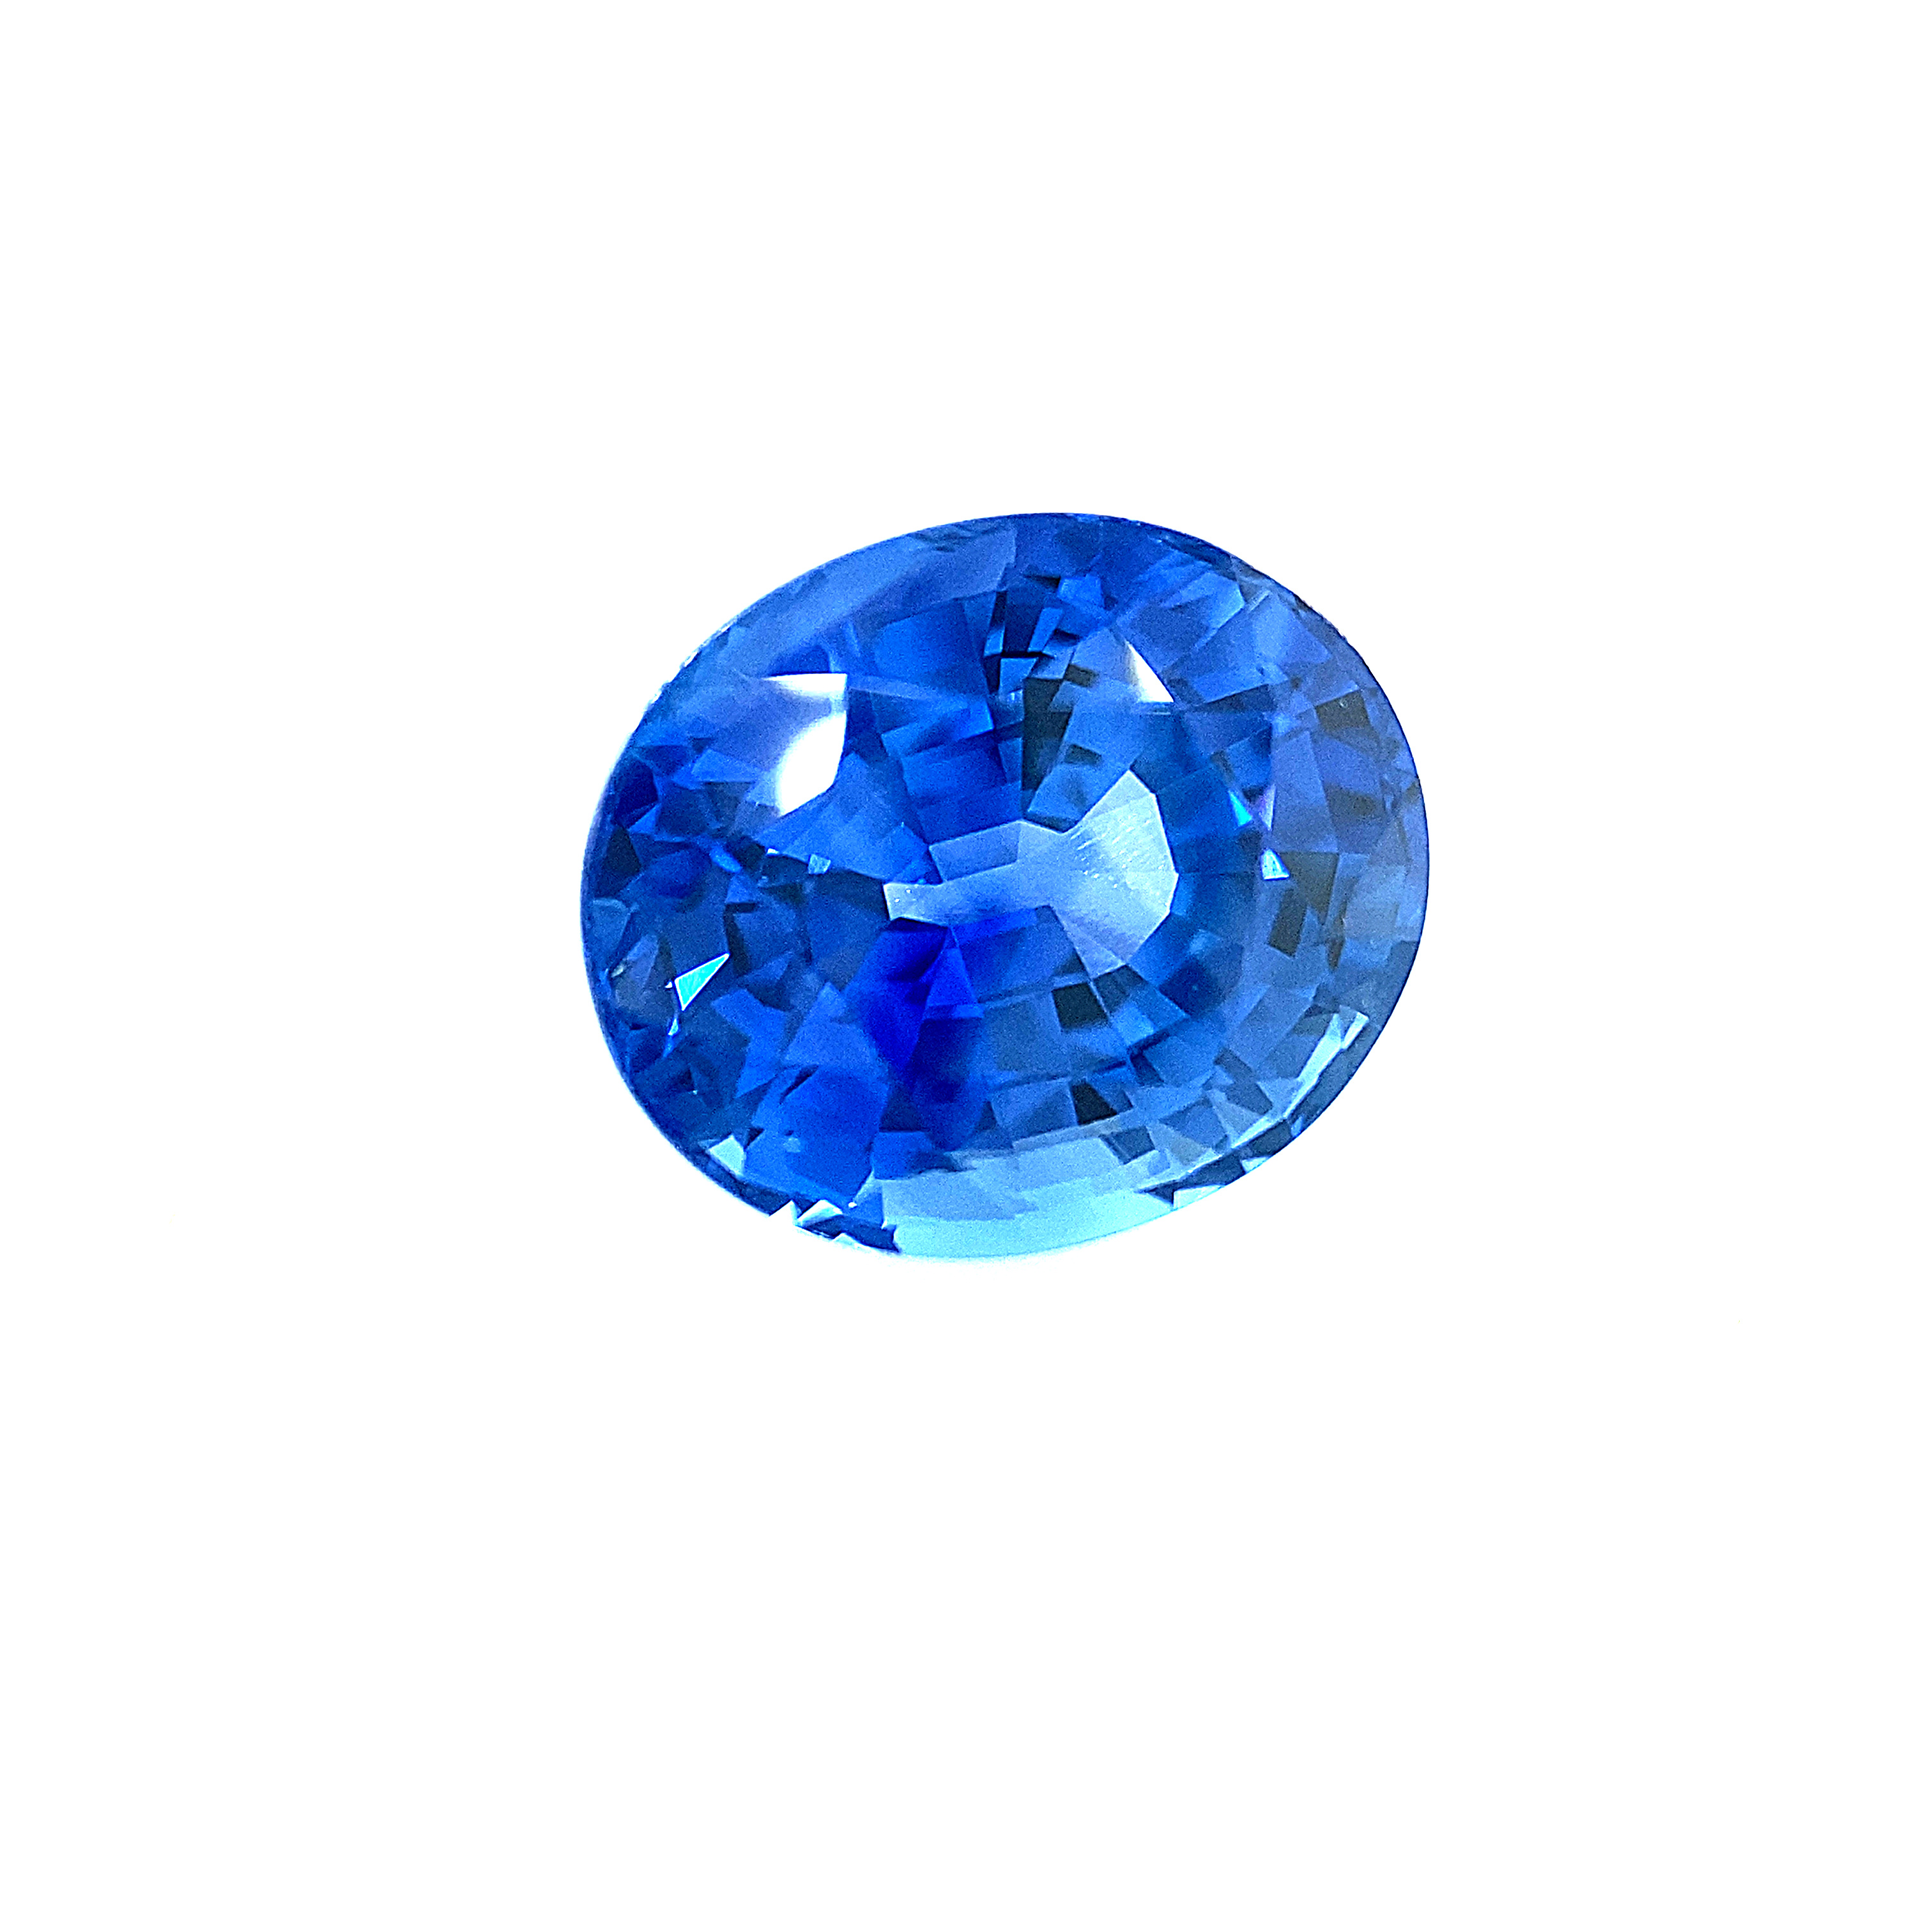 Natural unheated blue sapphire